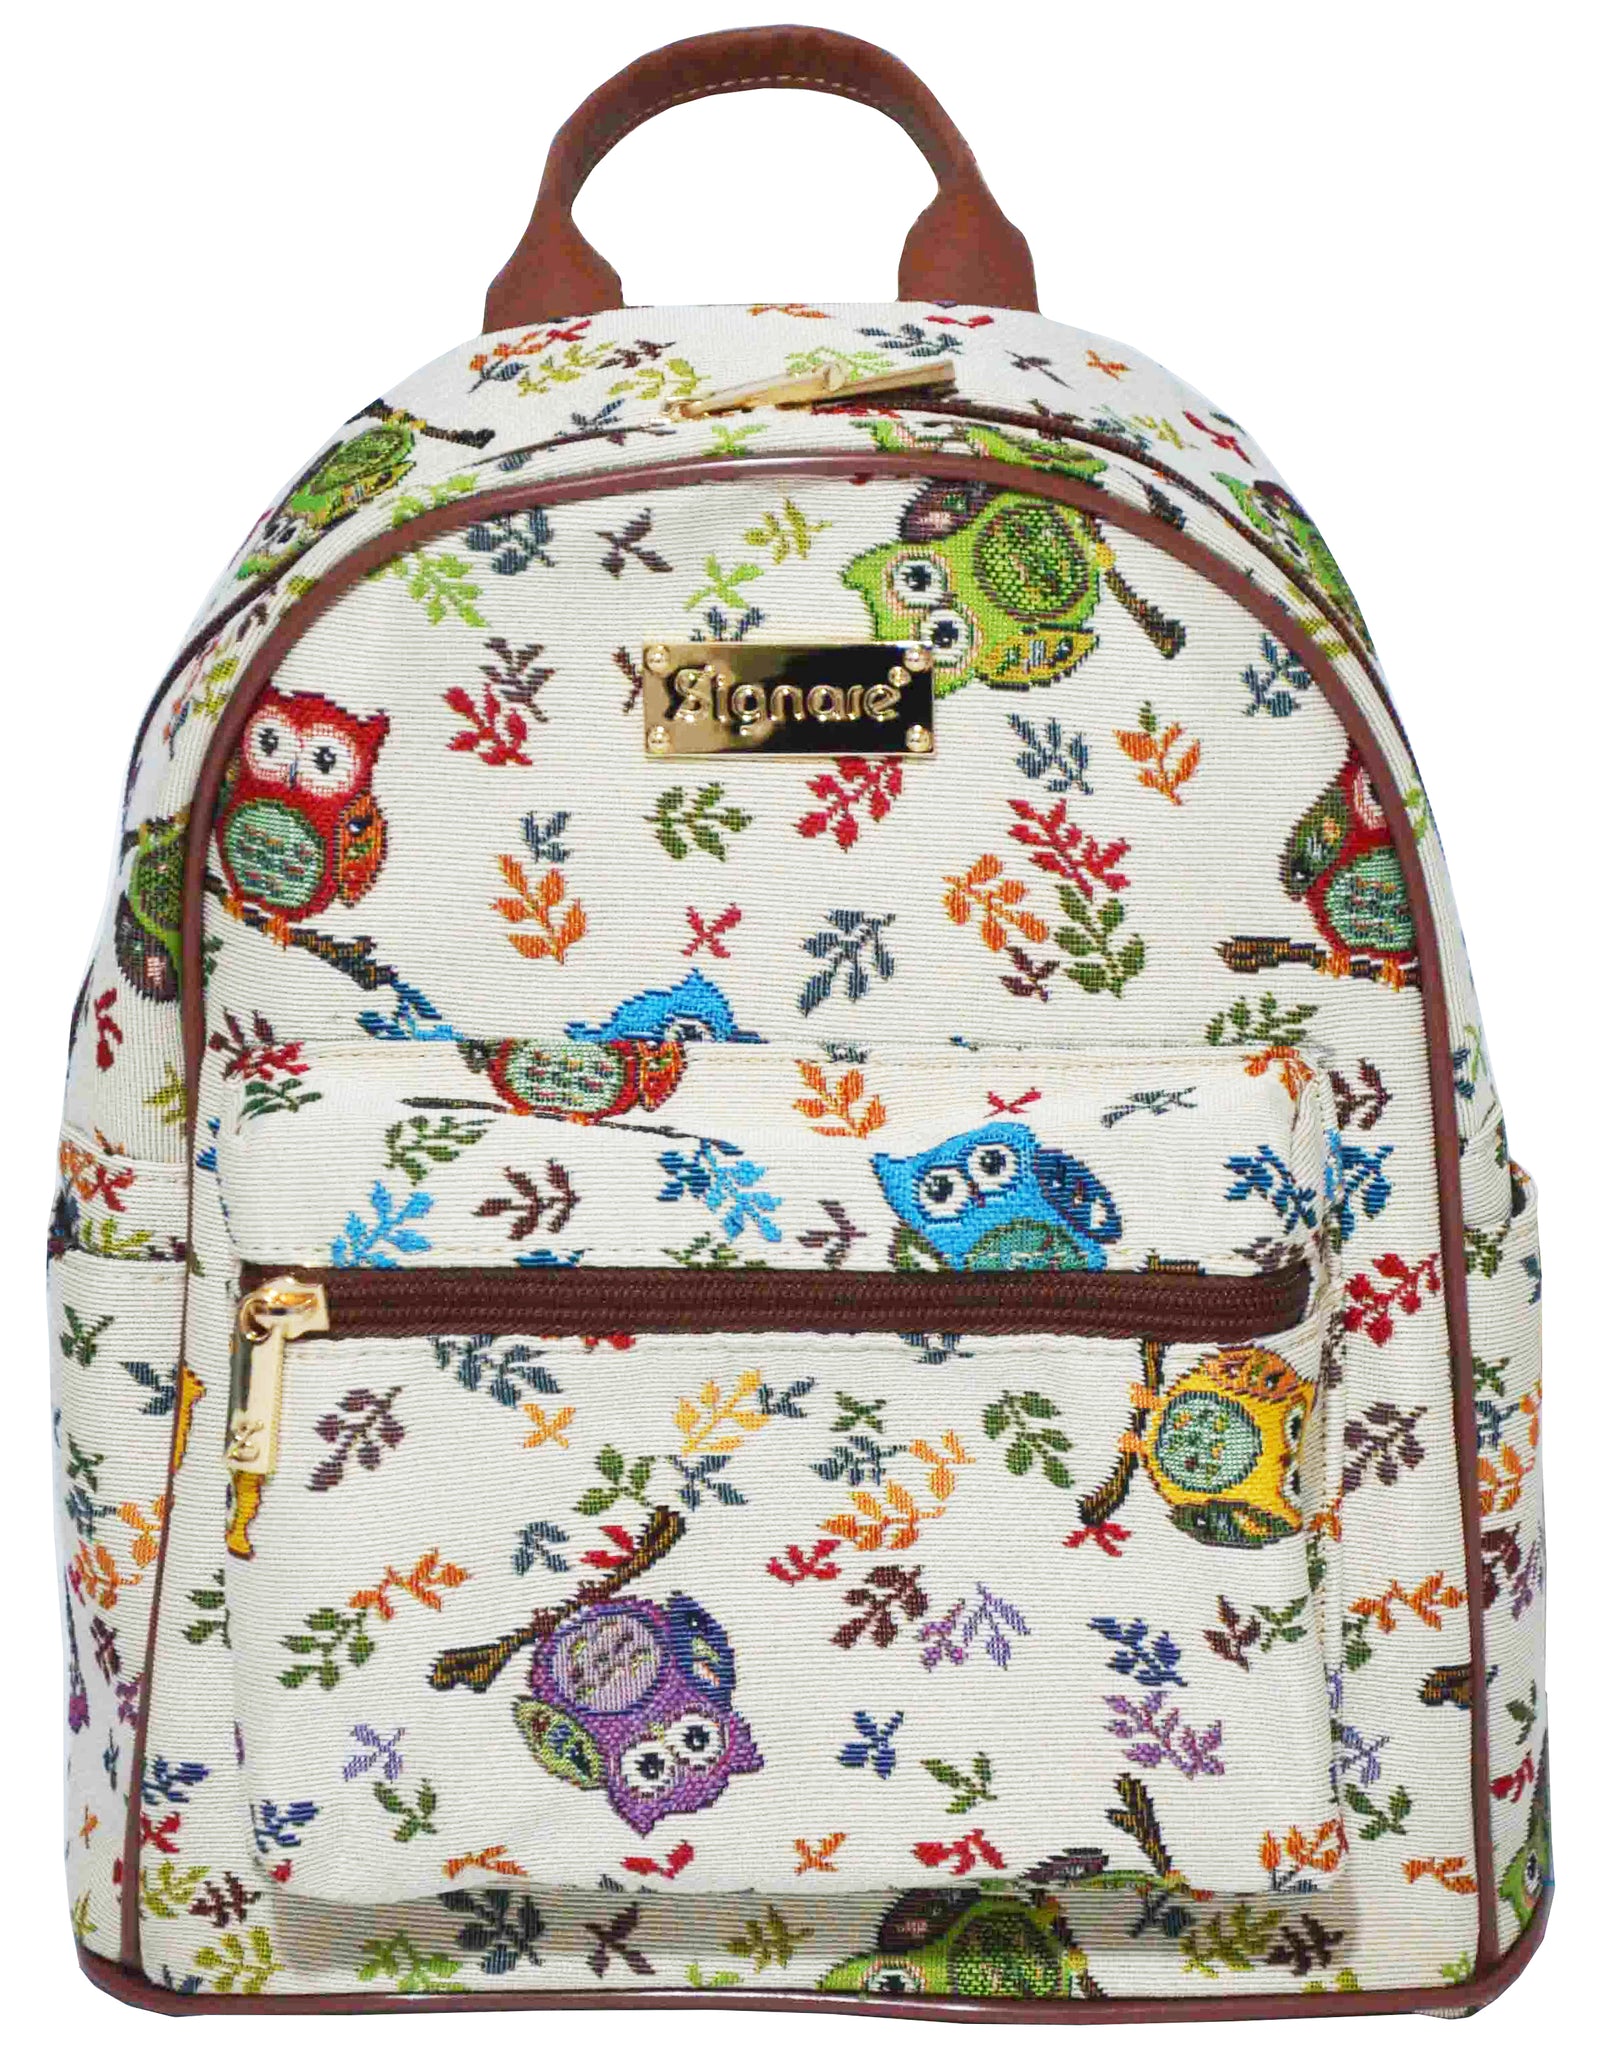 DAPK-OWL | Owl daypack bag